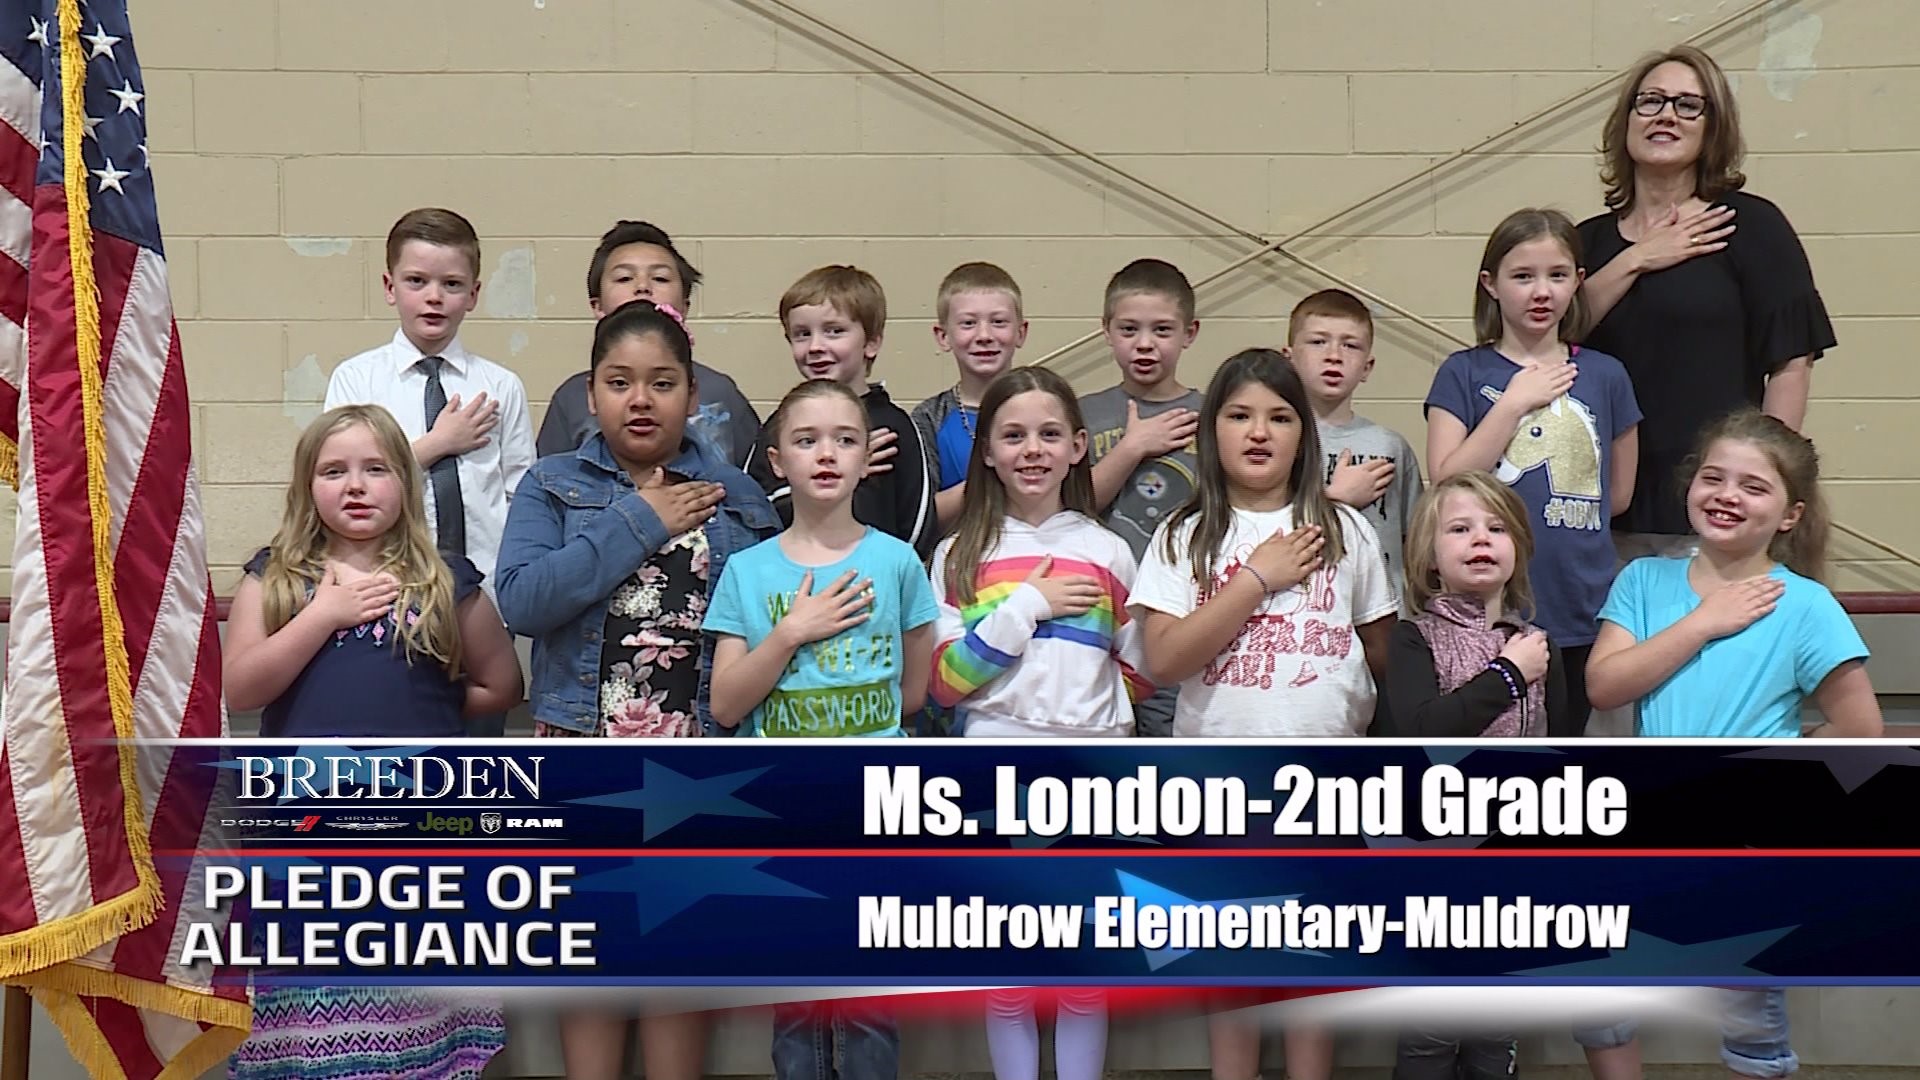 Ms. London  2nd Grade Muldrow Elementary, Muldrow